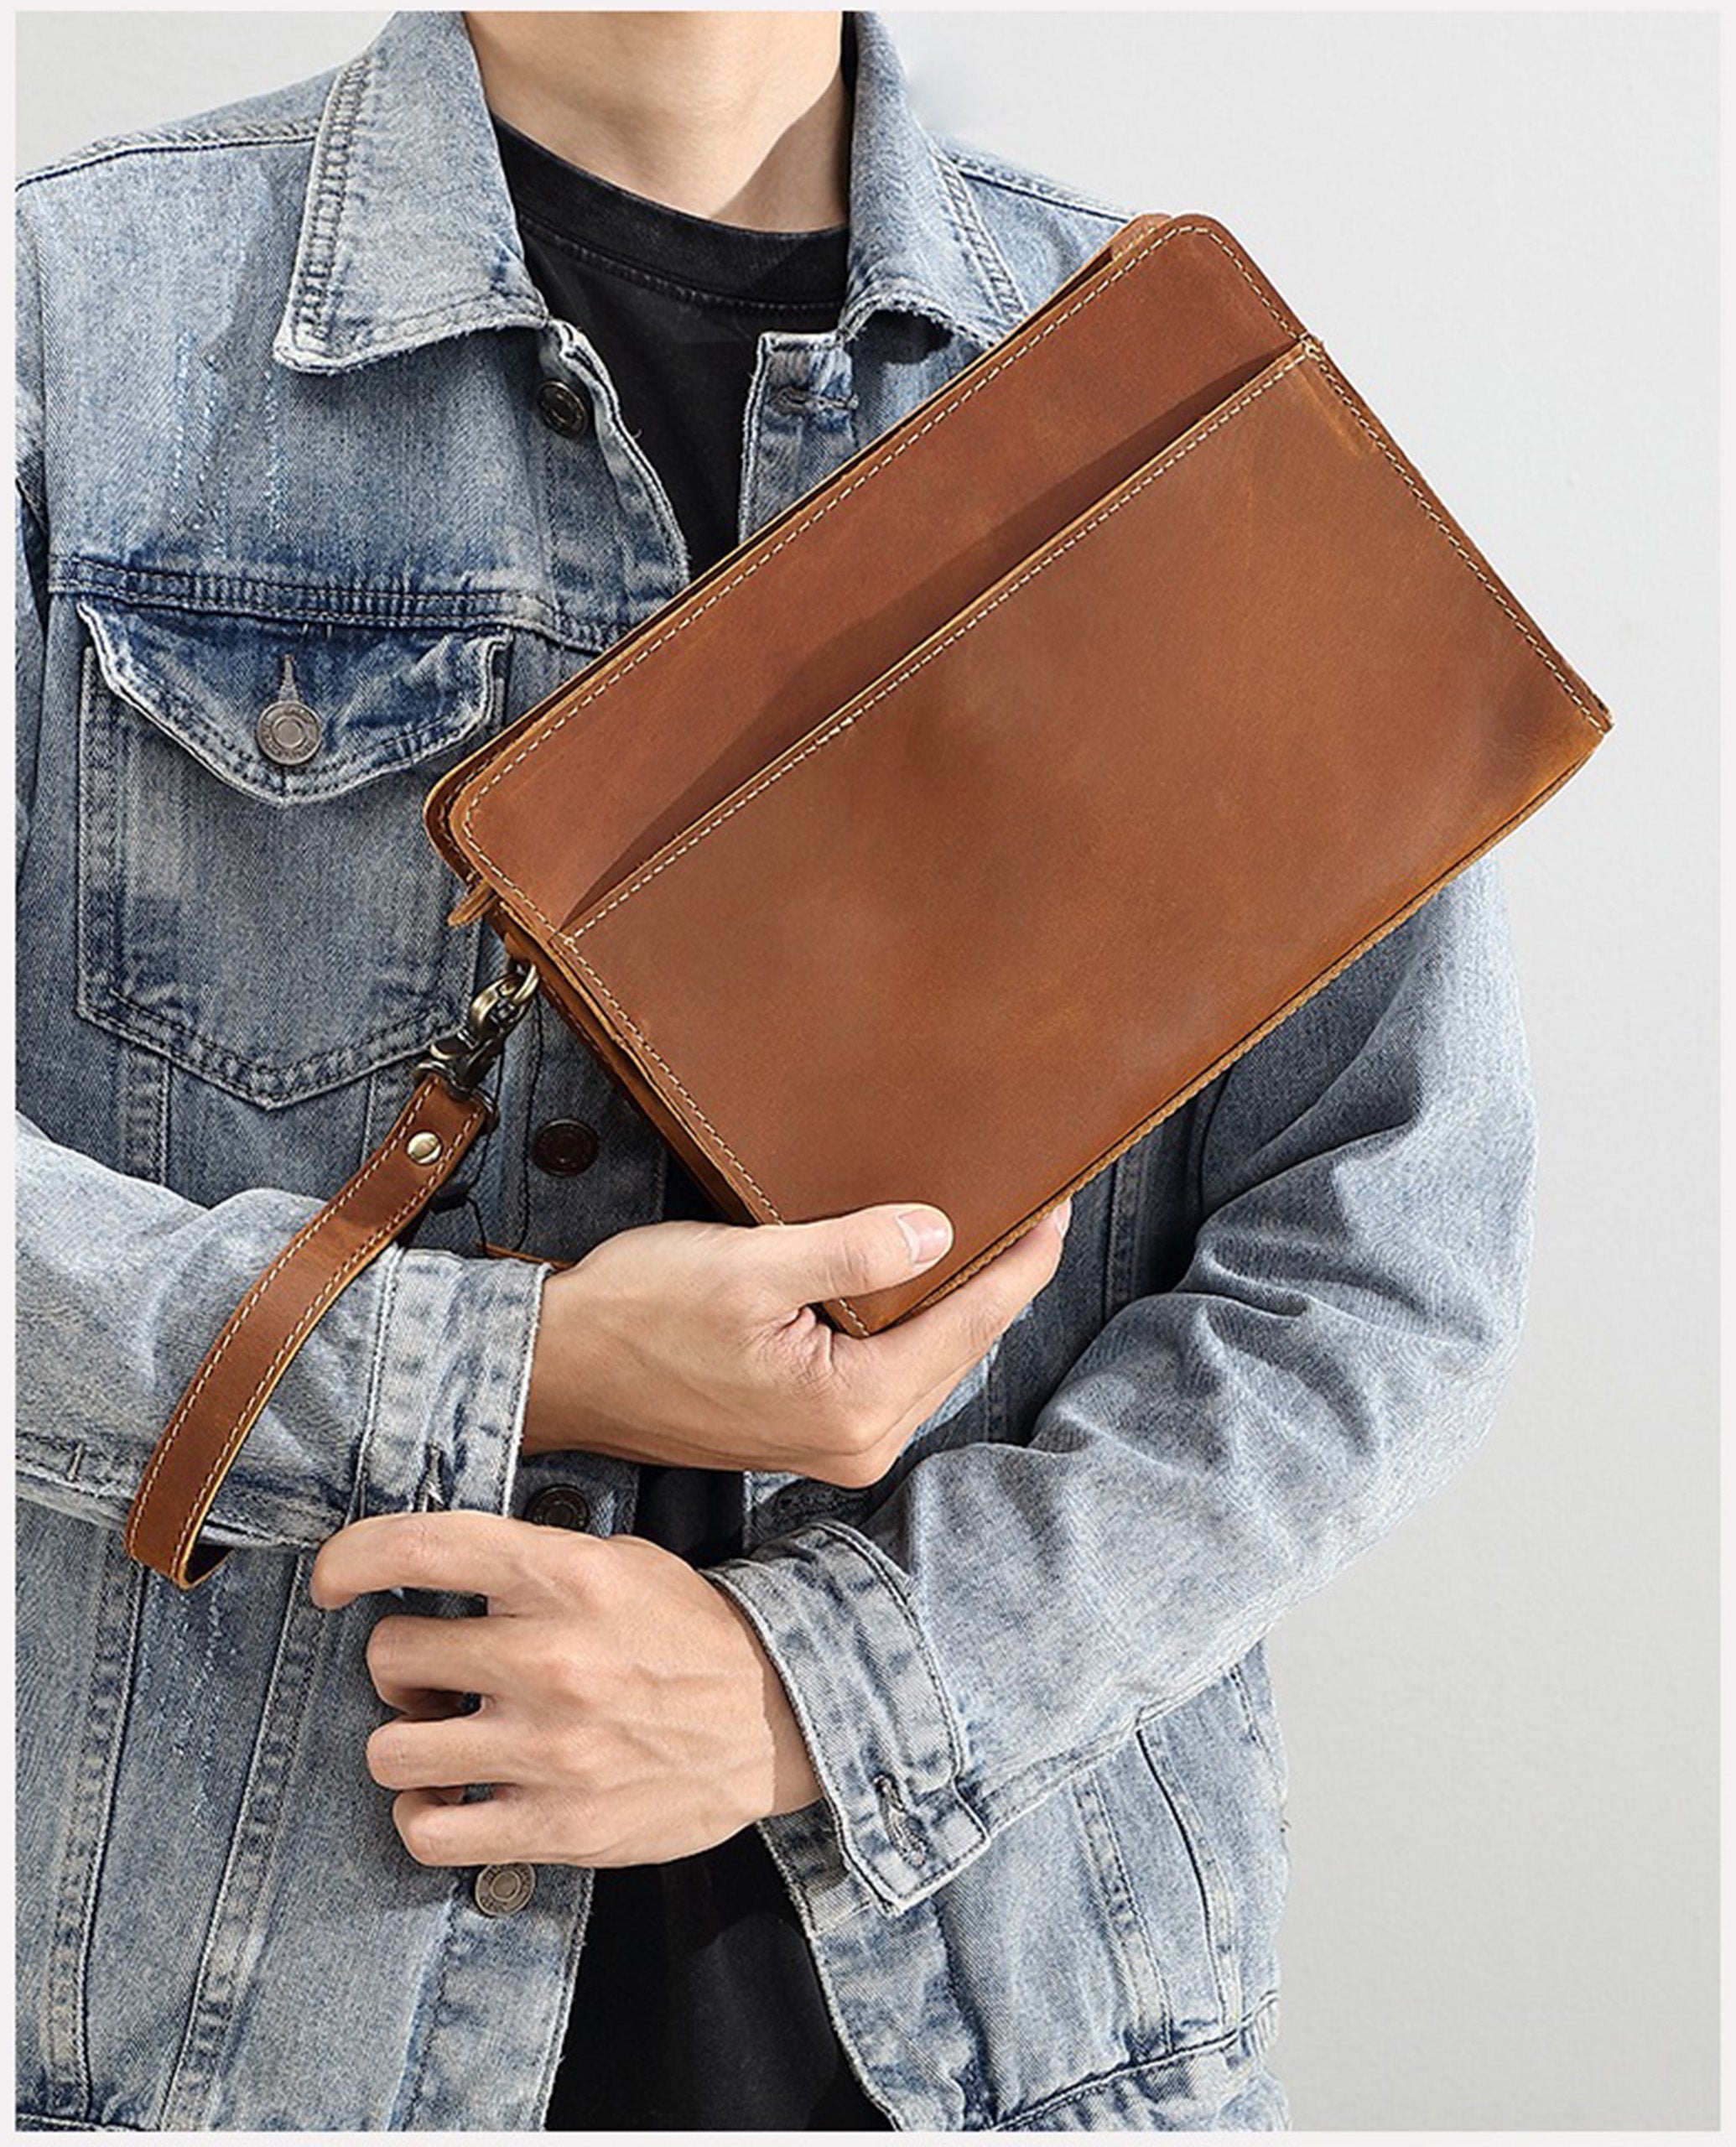 PRETTYMS Genuine Leather Mens Clutch Bag Man Purse Handbag 9 inches Large Hand Bag Big Clutch Wallet